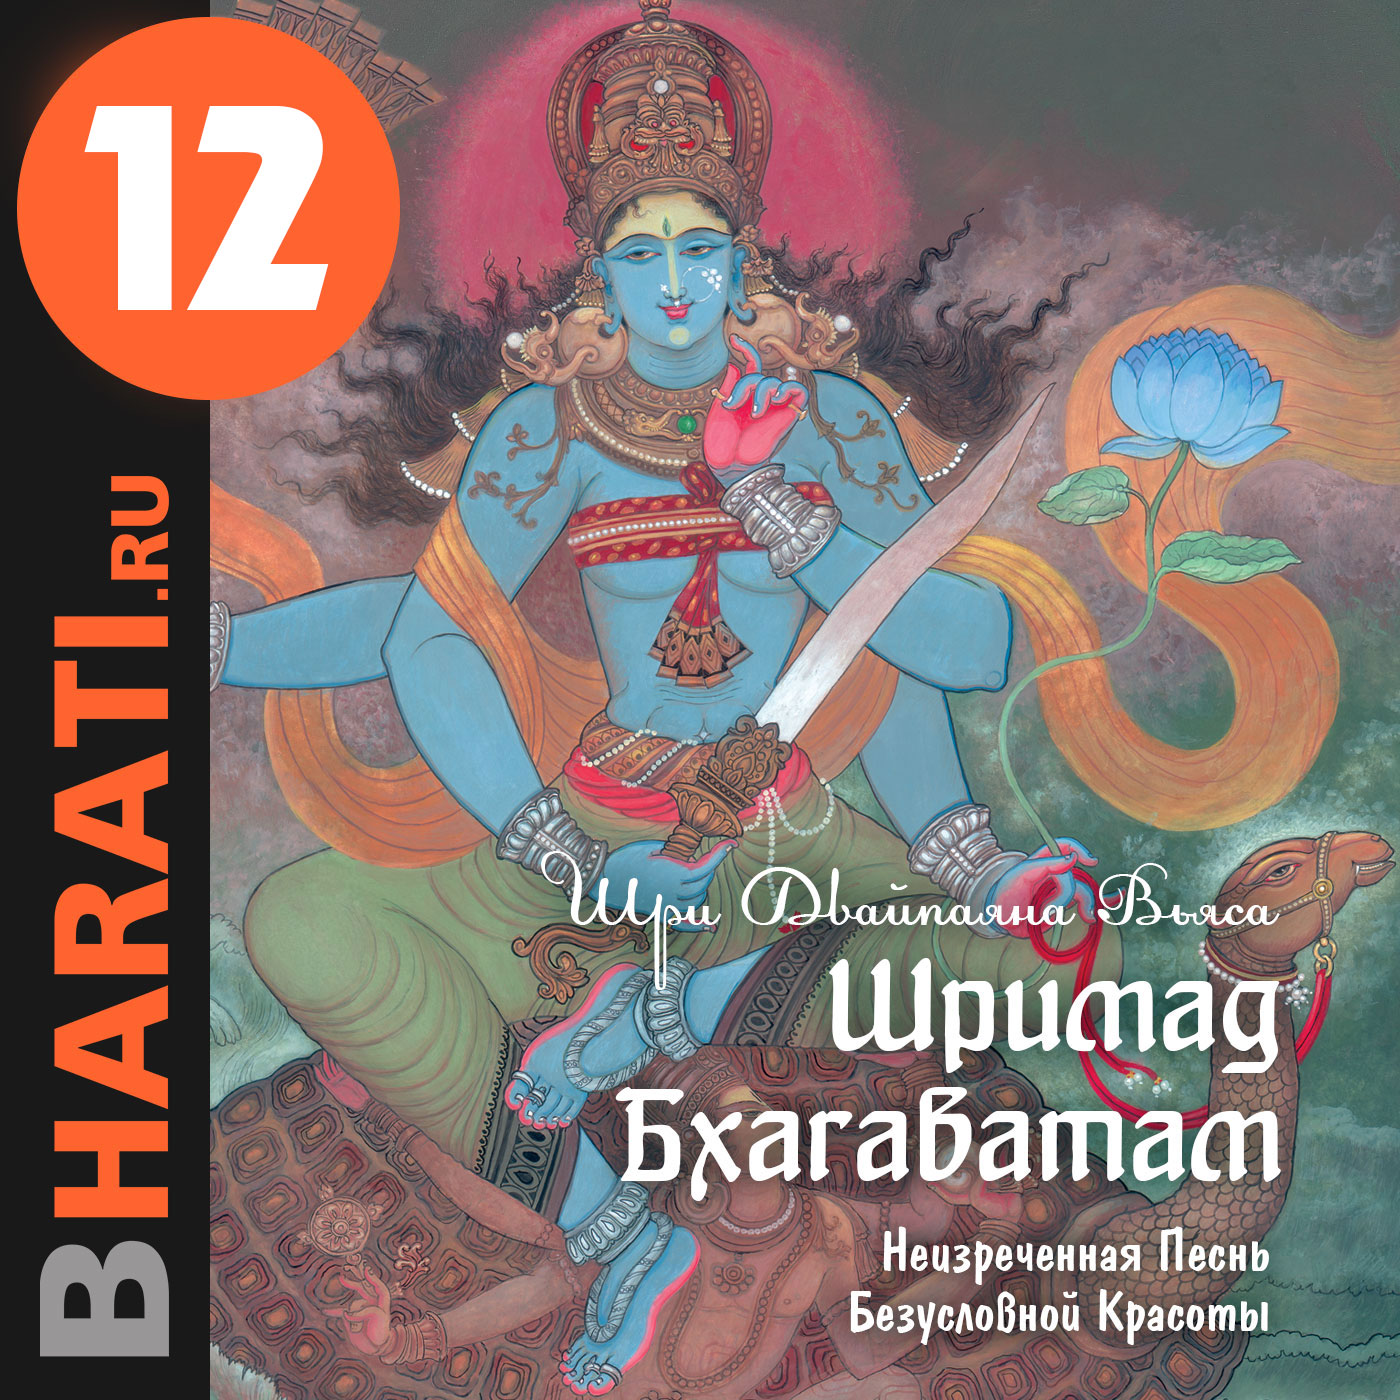 Аудиокнига "Шримад Бхагаватам". Книга 12: "Откровение блаженного Шуки"